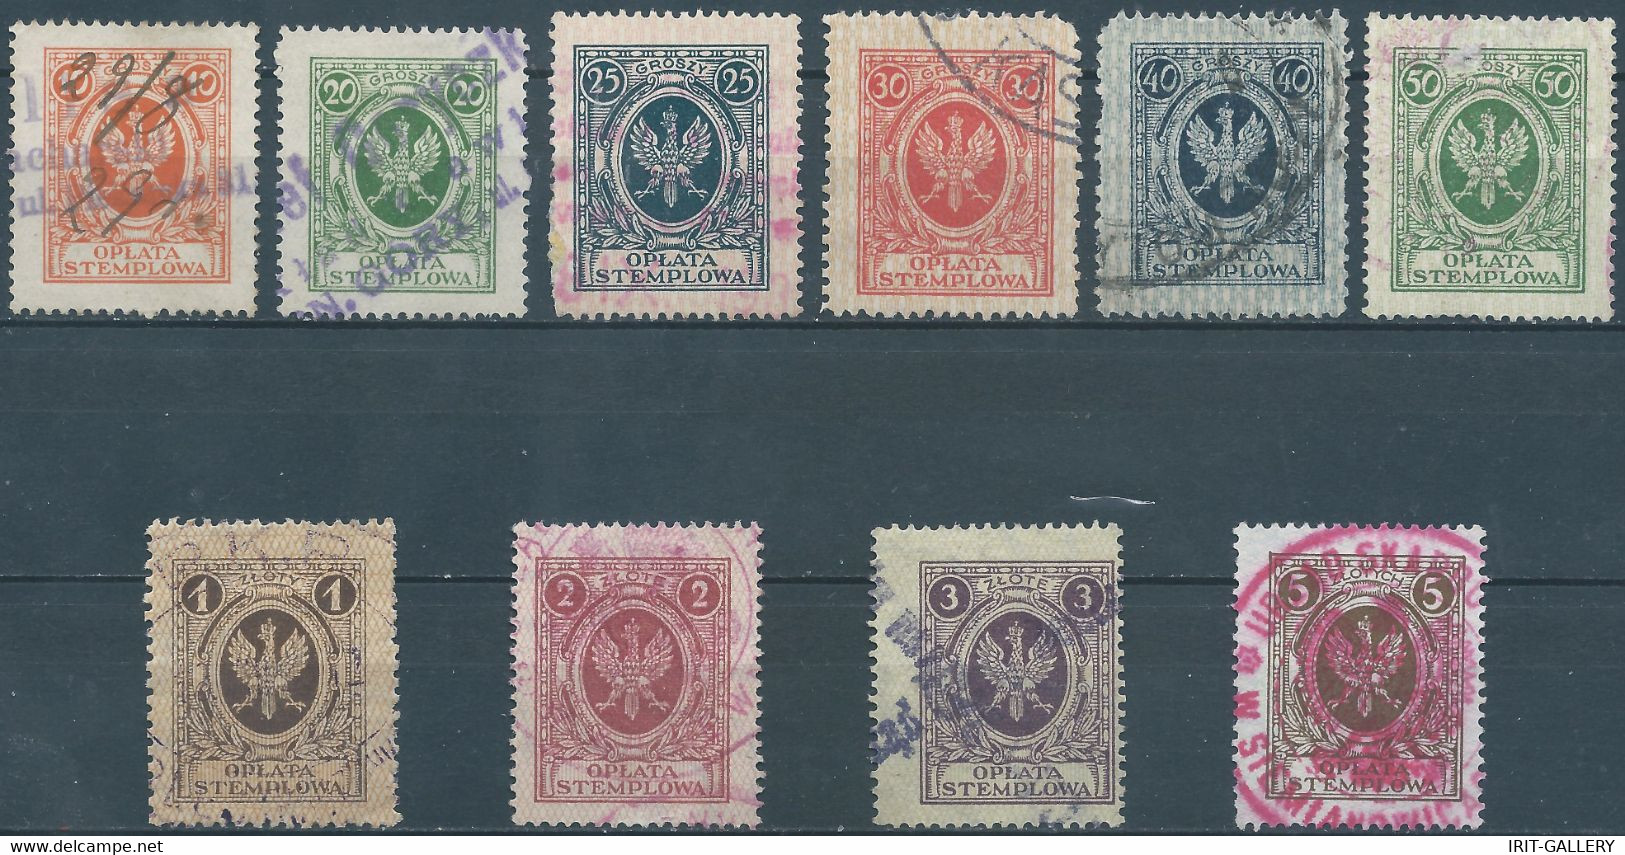 POLONIA-POLAND-POLSKA,Revenue Stamps Fiscal Tax 1925-1929 (OPLATA STEMPLOWA)Used - Steuermarken